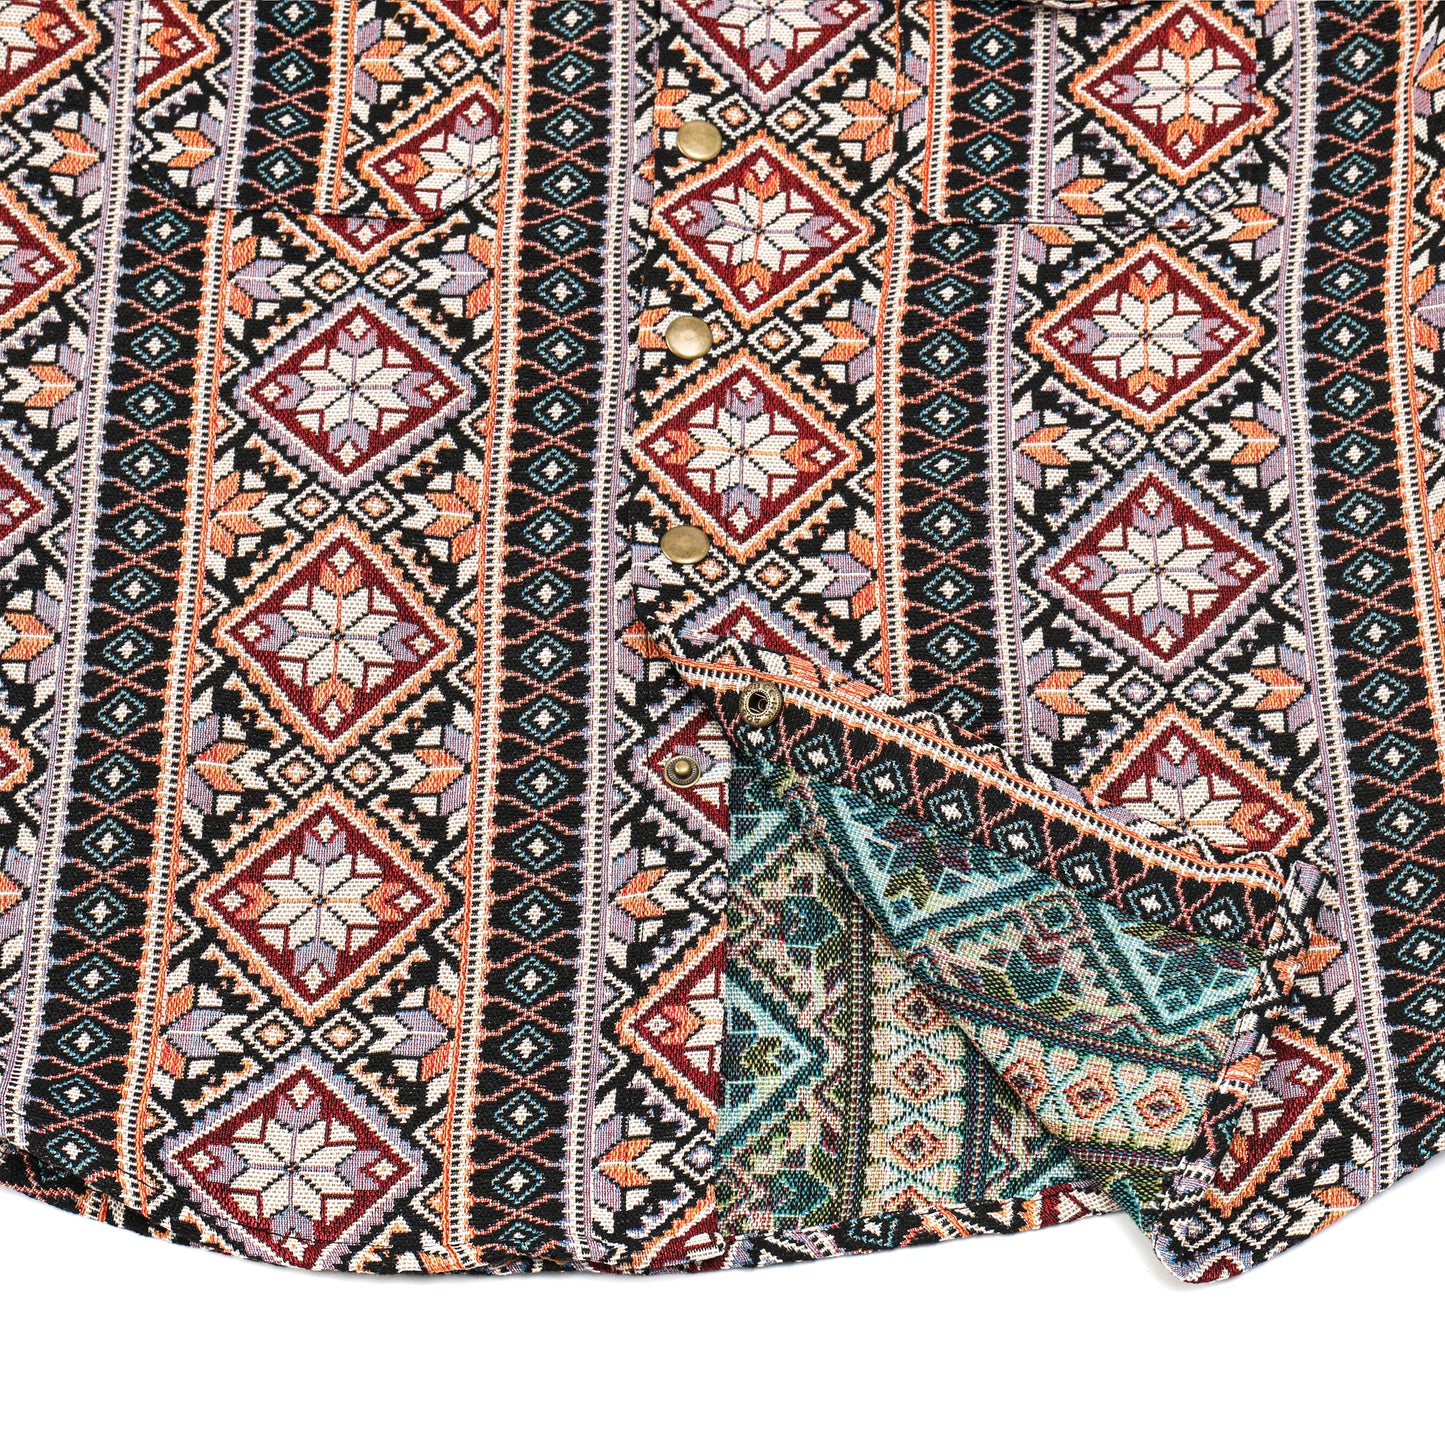 Aztec Western Jacquard Heavy Fabric Shacket